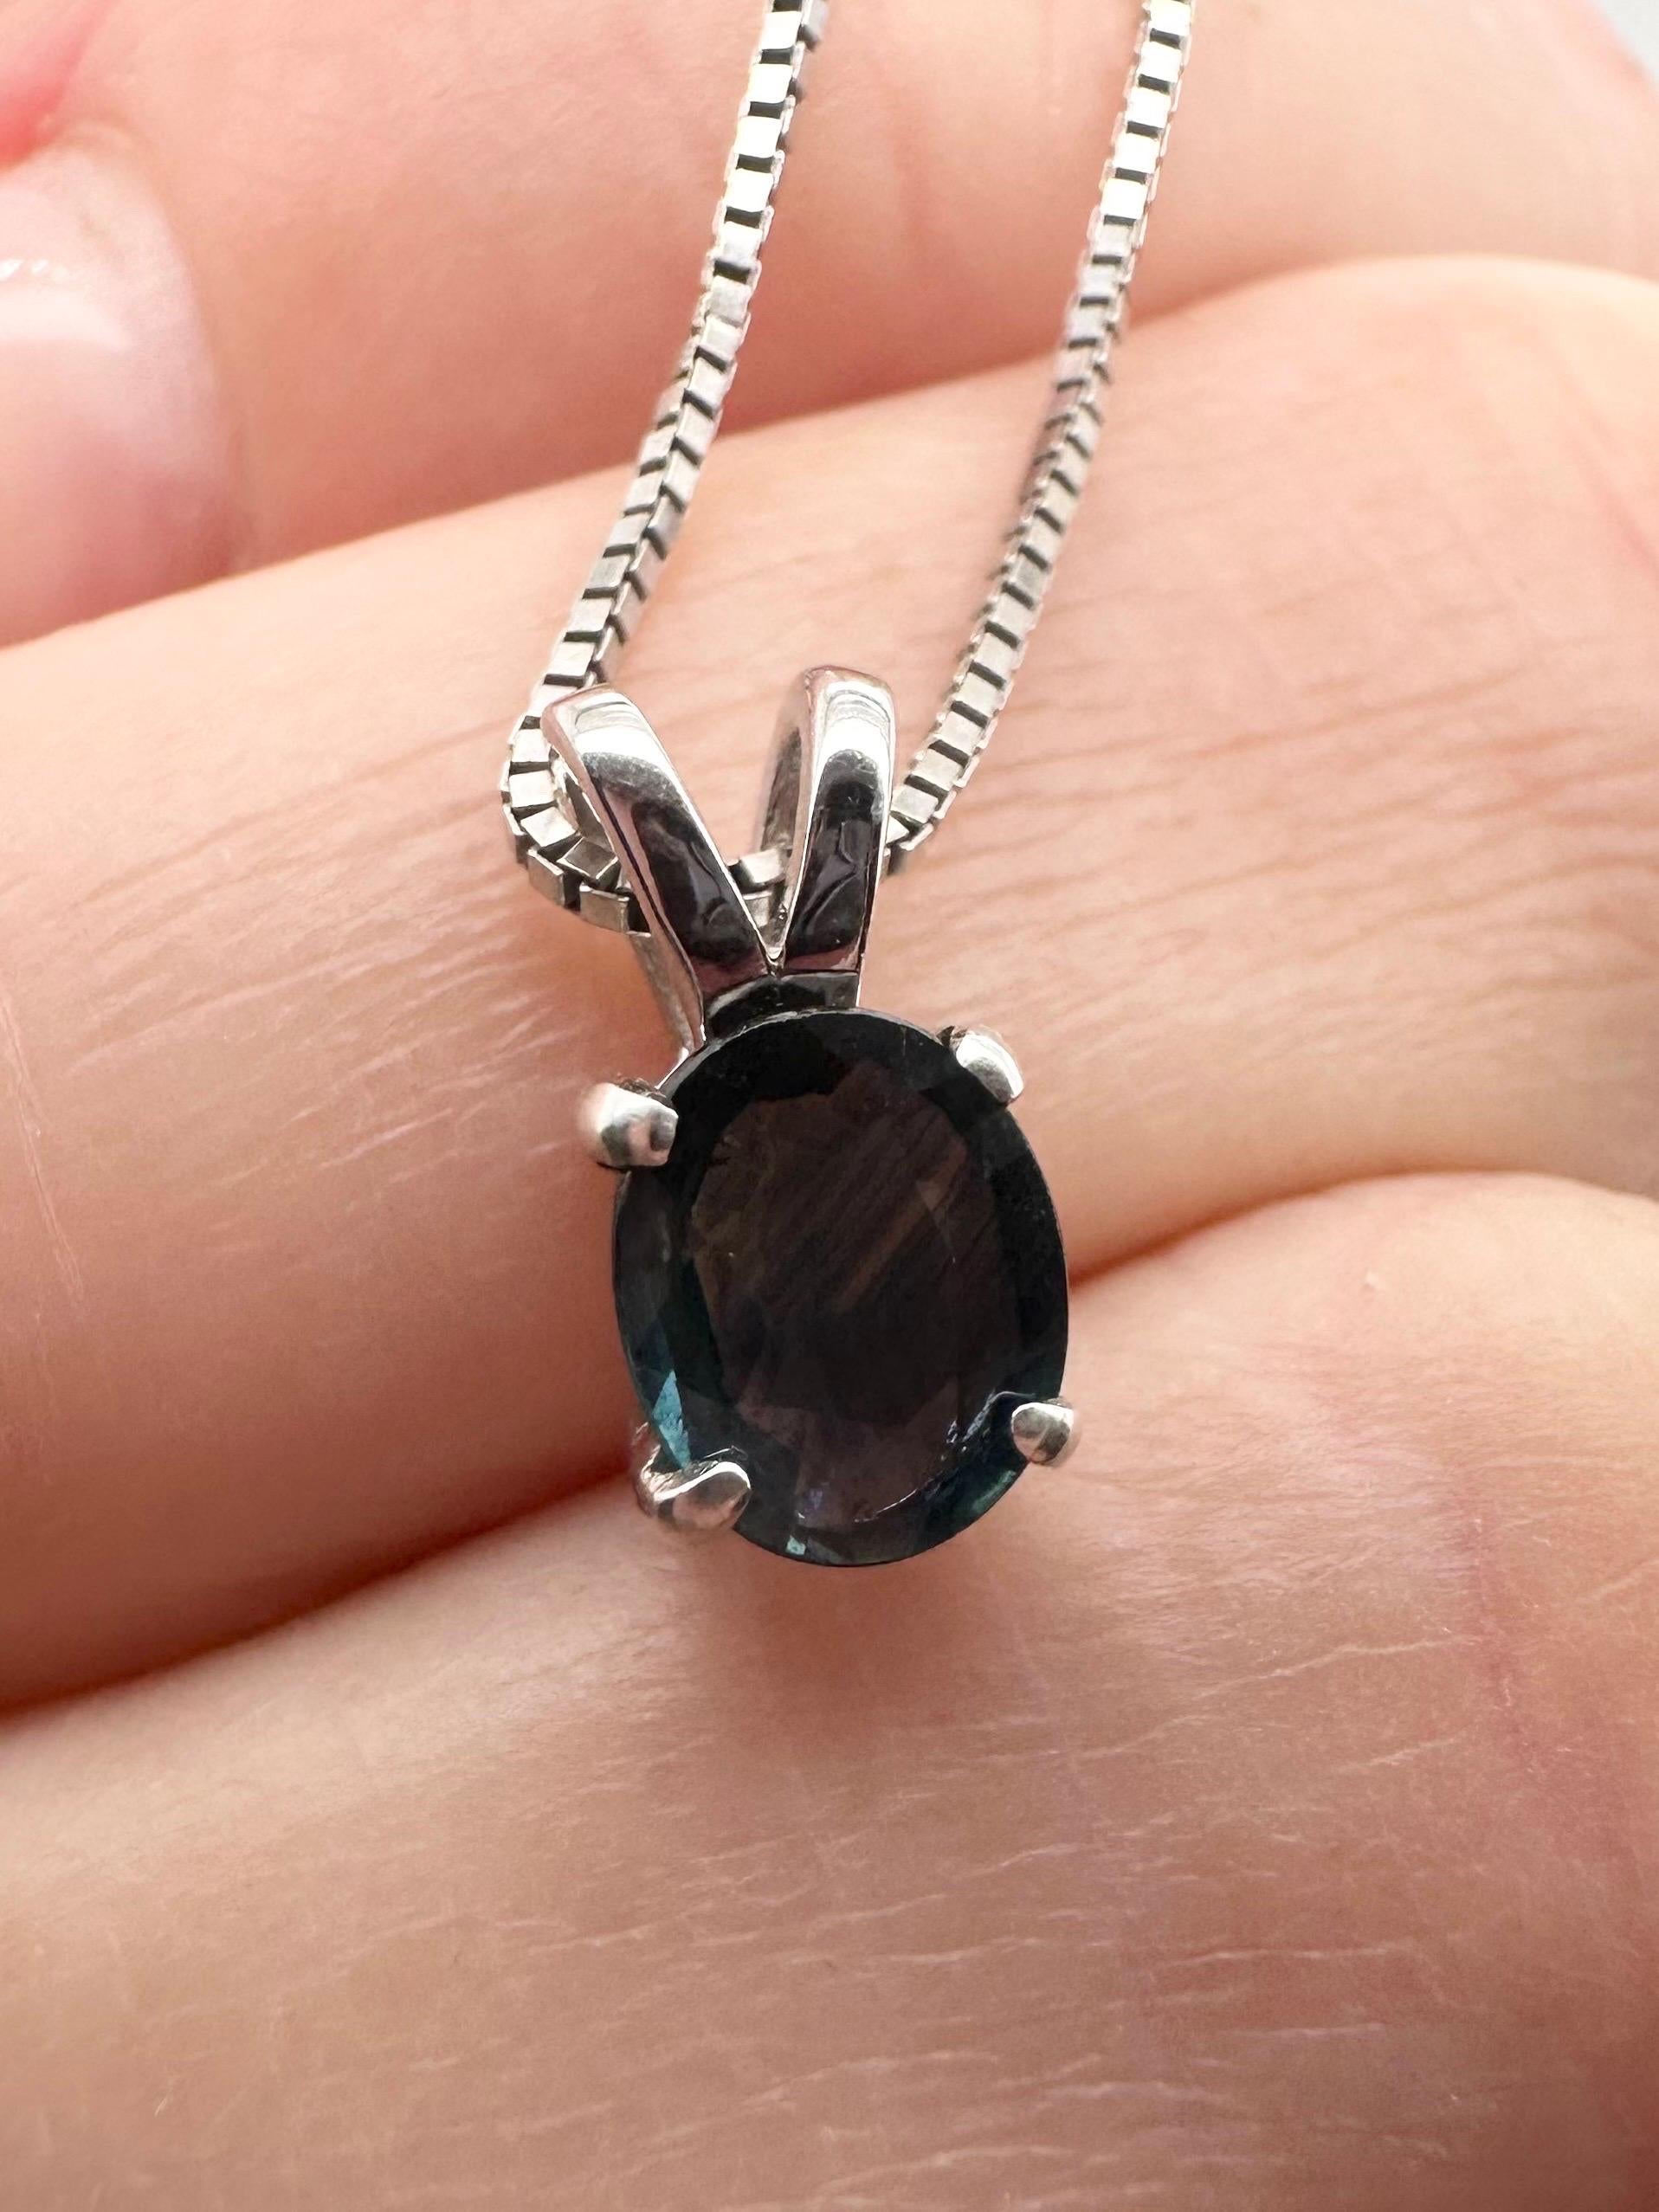 Sapphire pendant necklace 925 silver chain 18